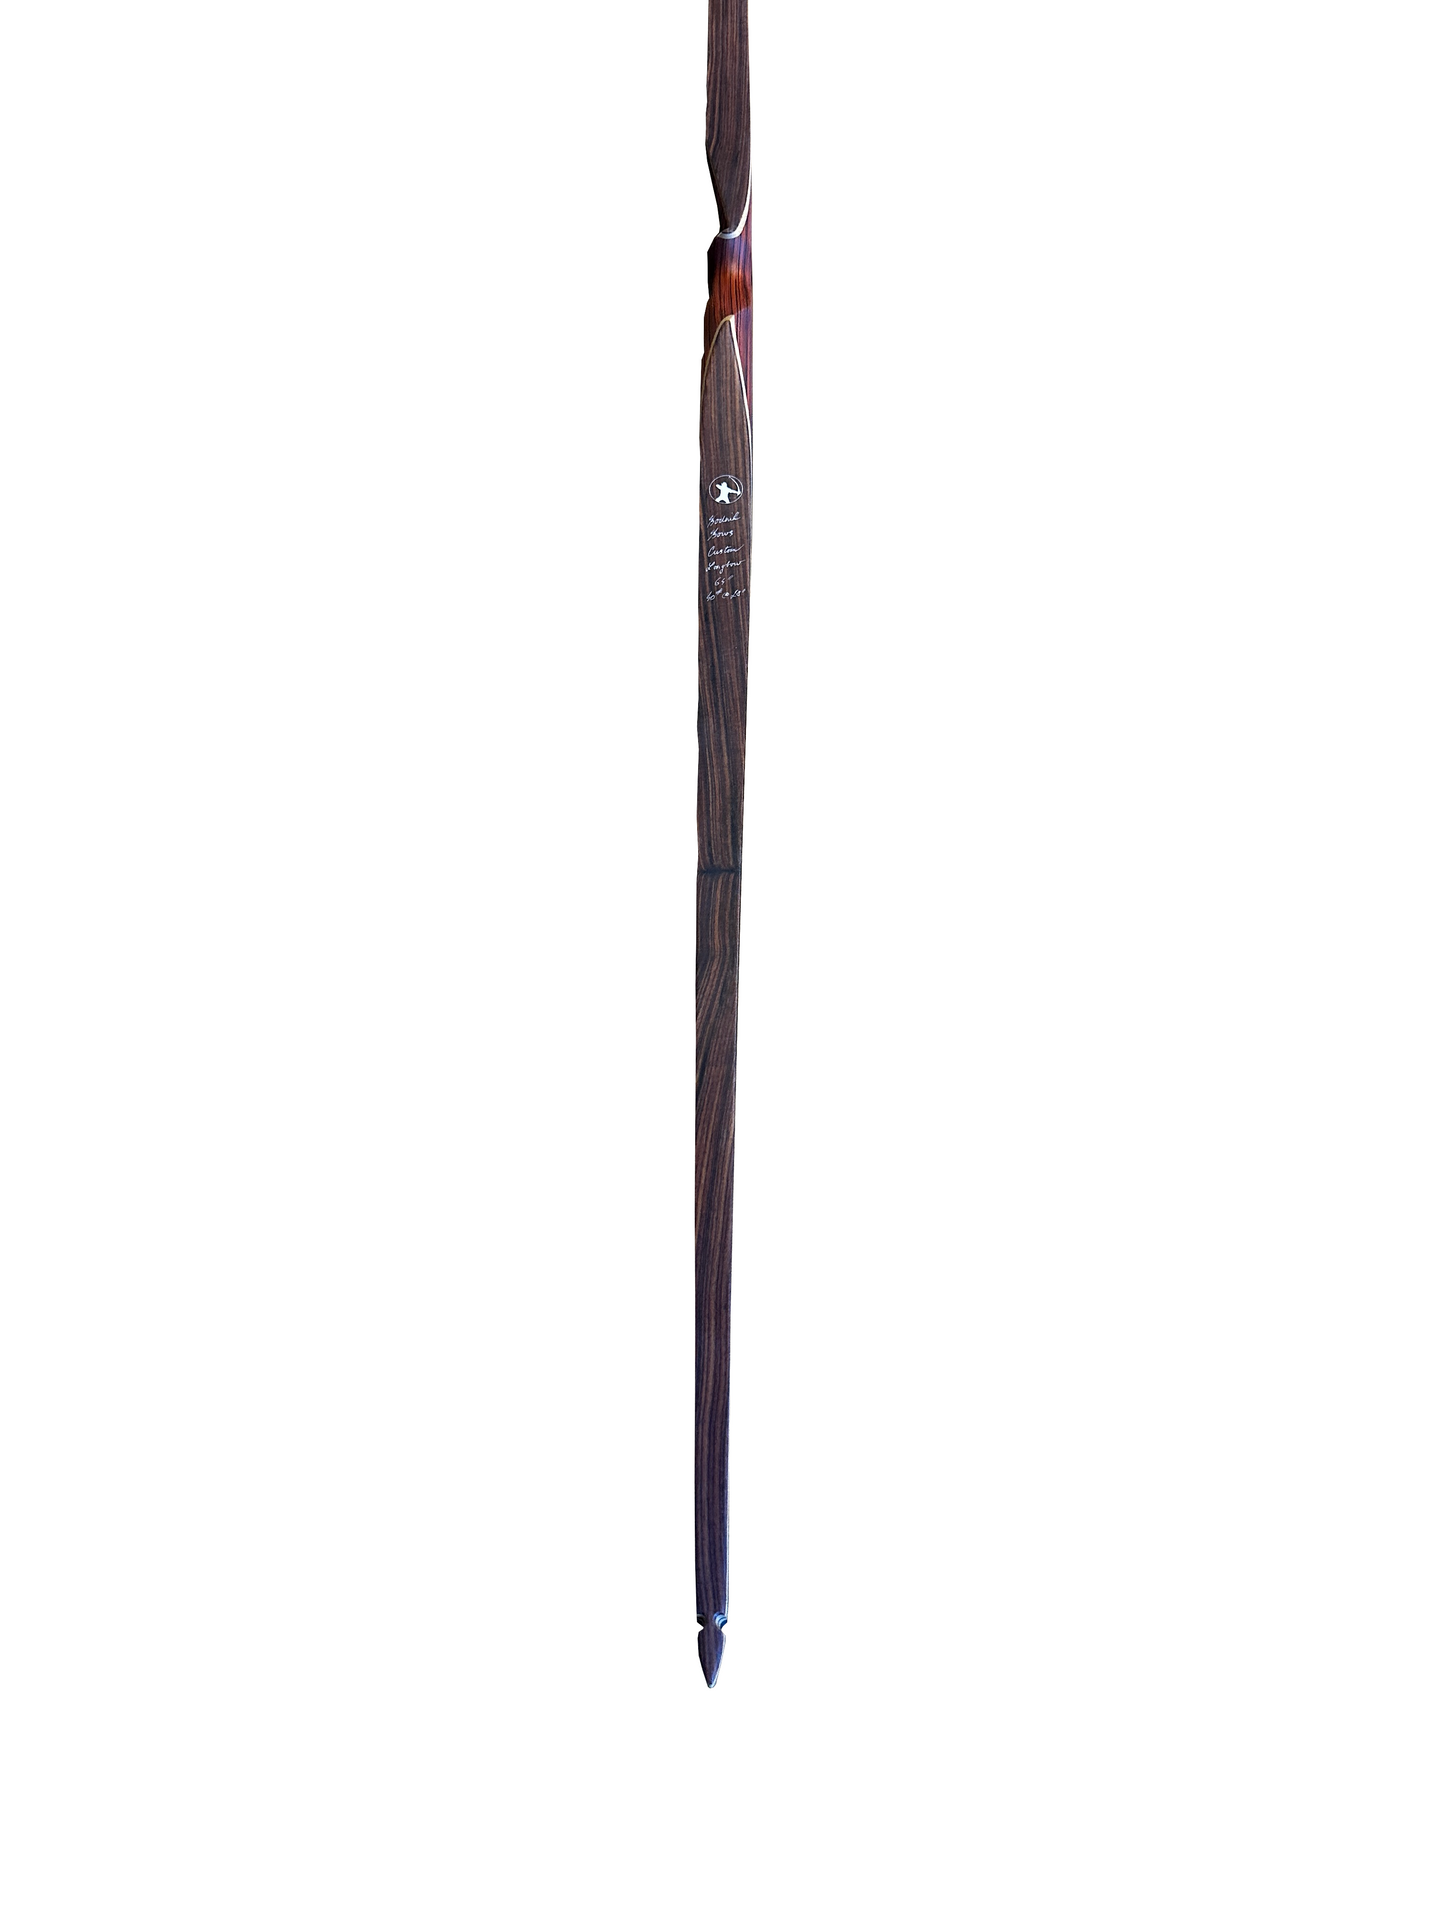 Bodnik Bows Custom Longbow 64", 40Lbs @ 28"